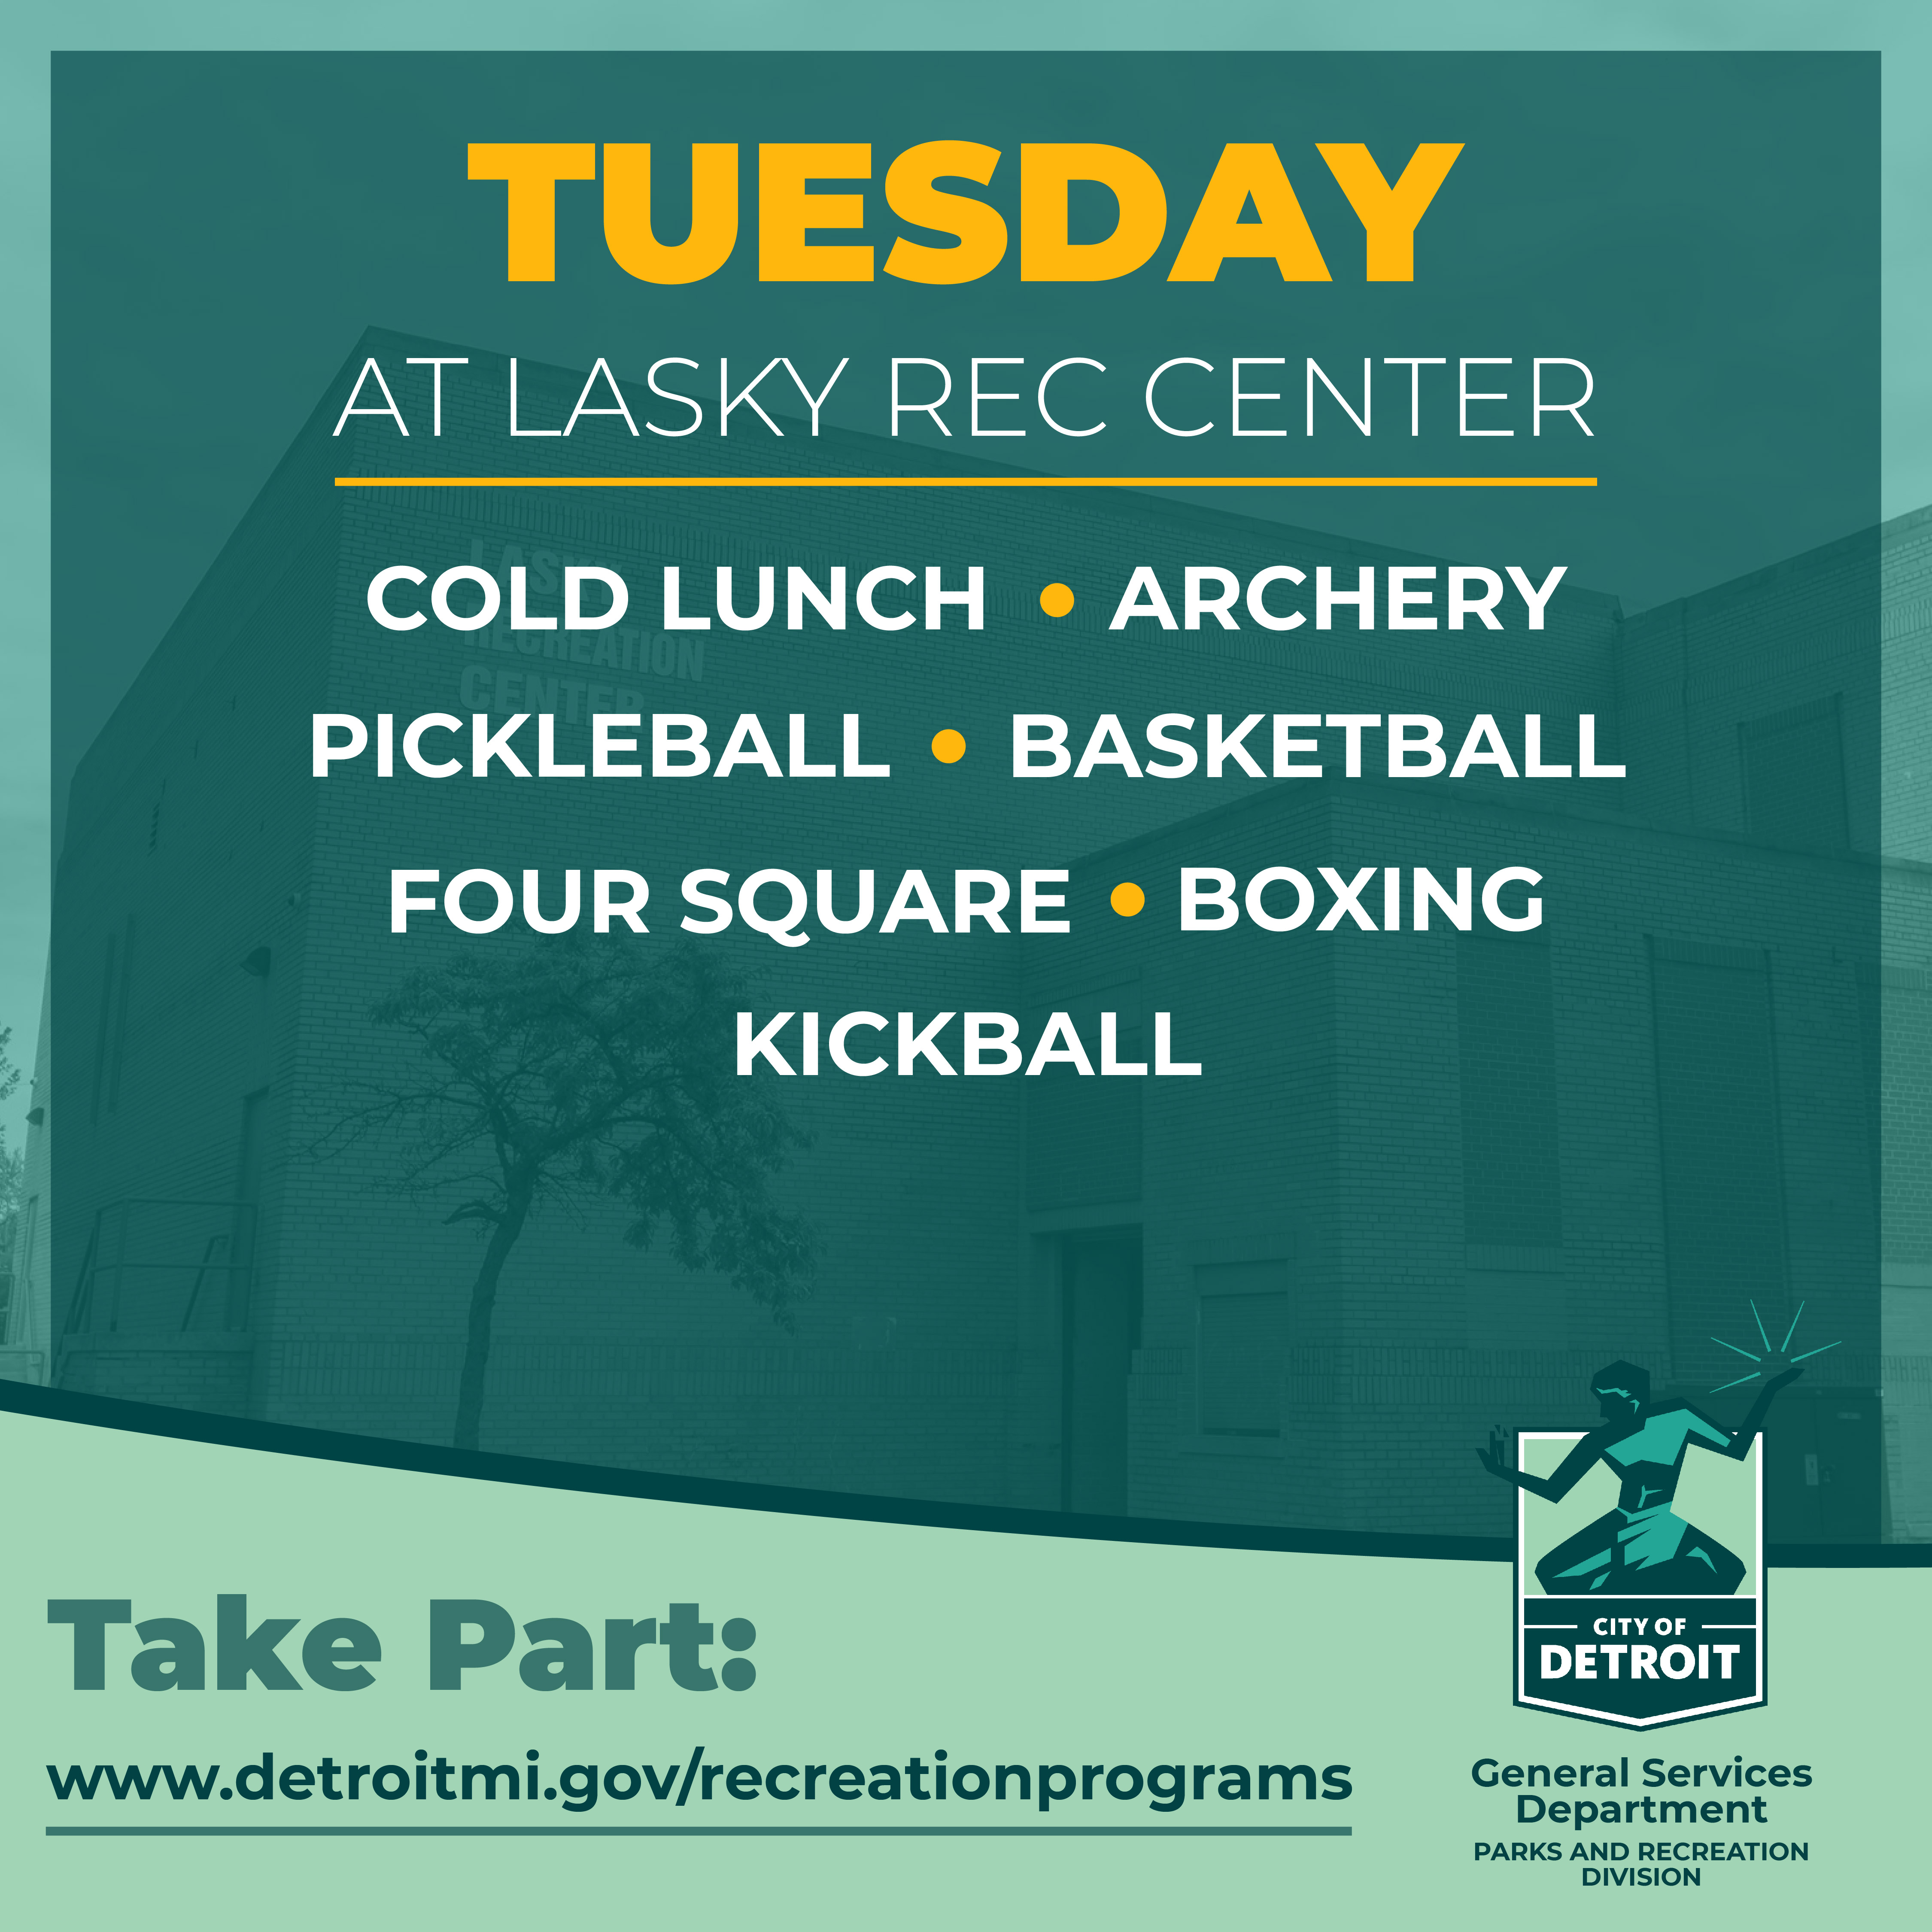 Tuesdays at Lasky